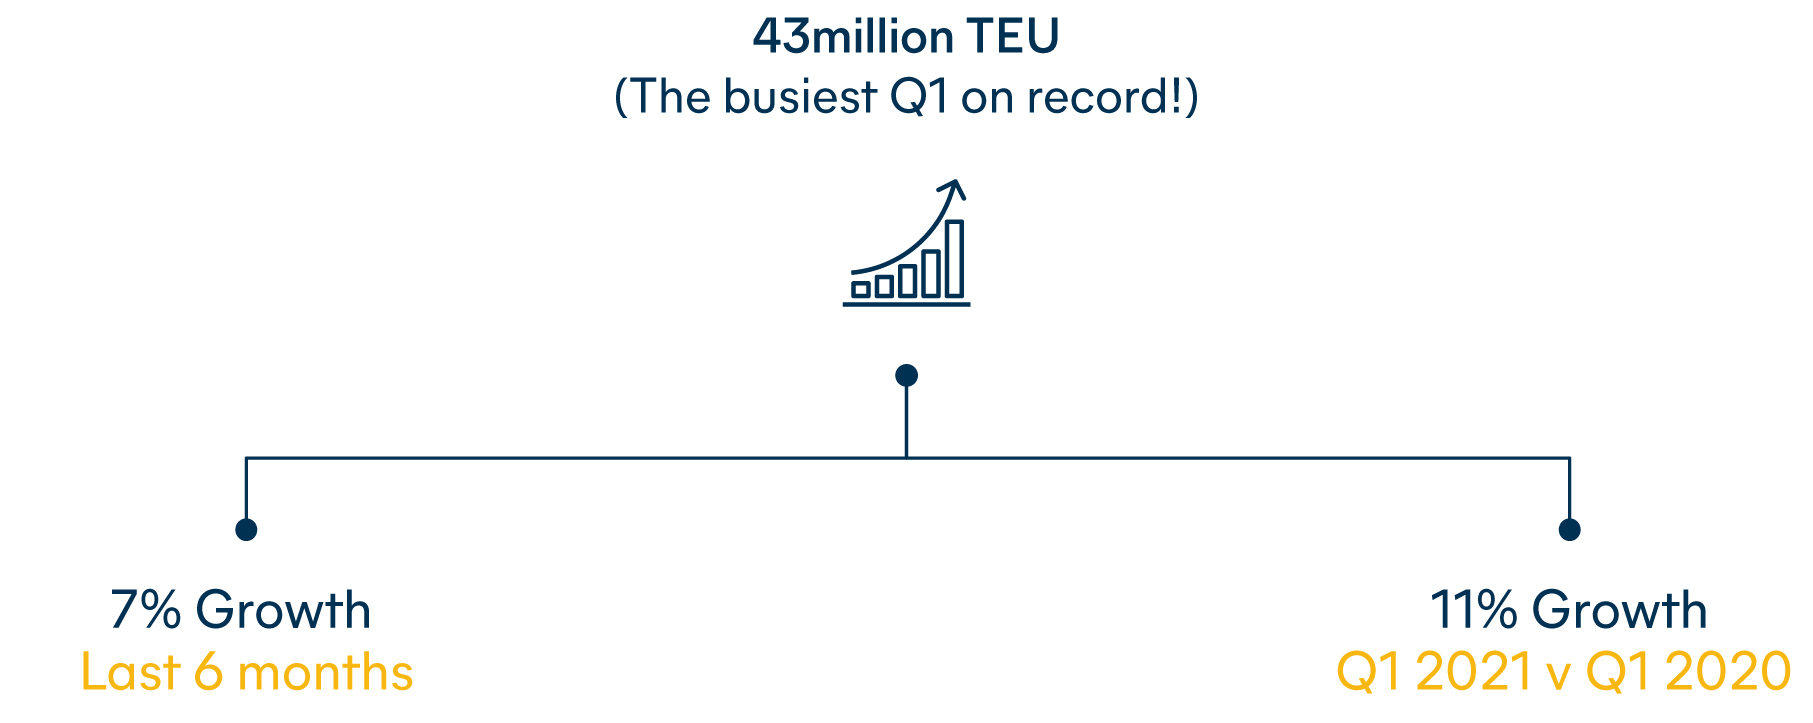 capacity constraints 43 million TEU